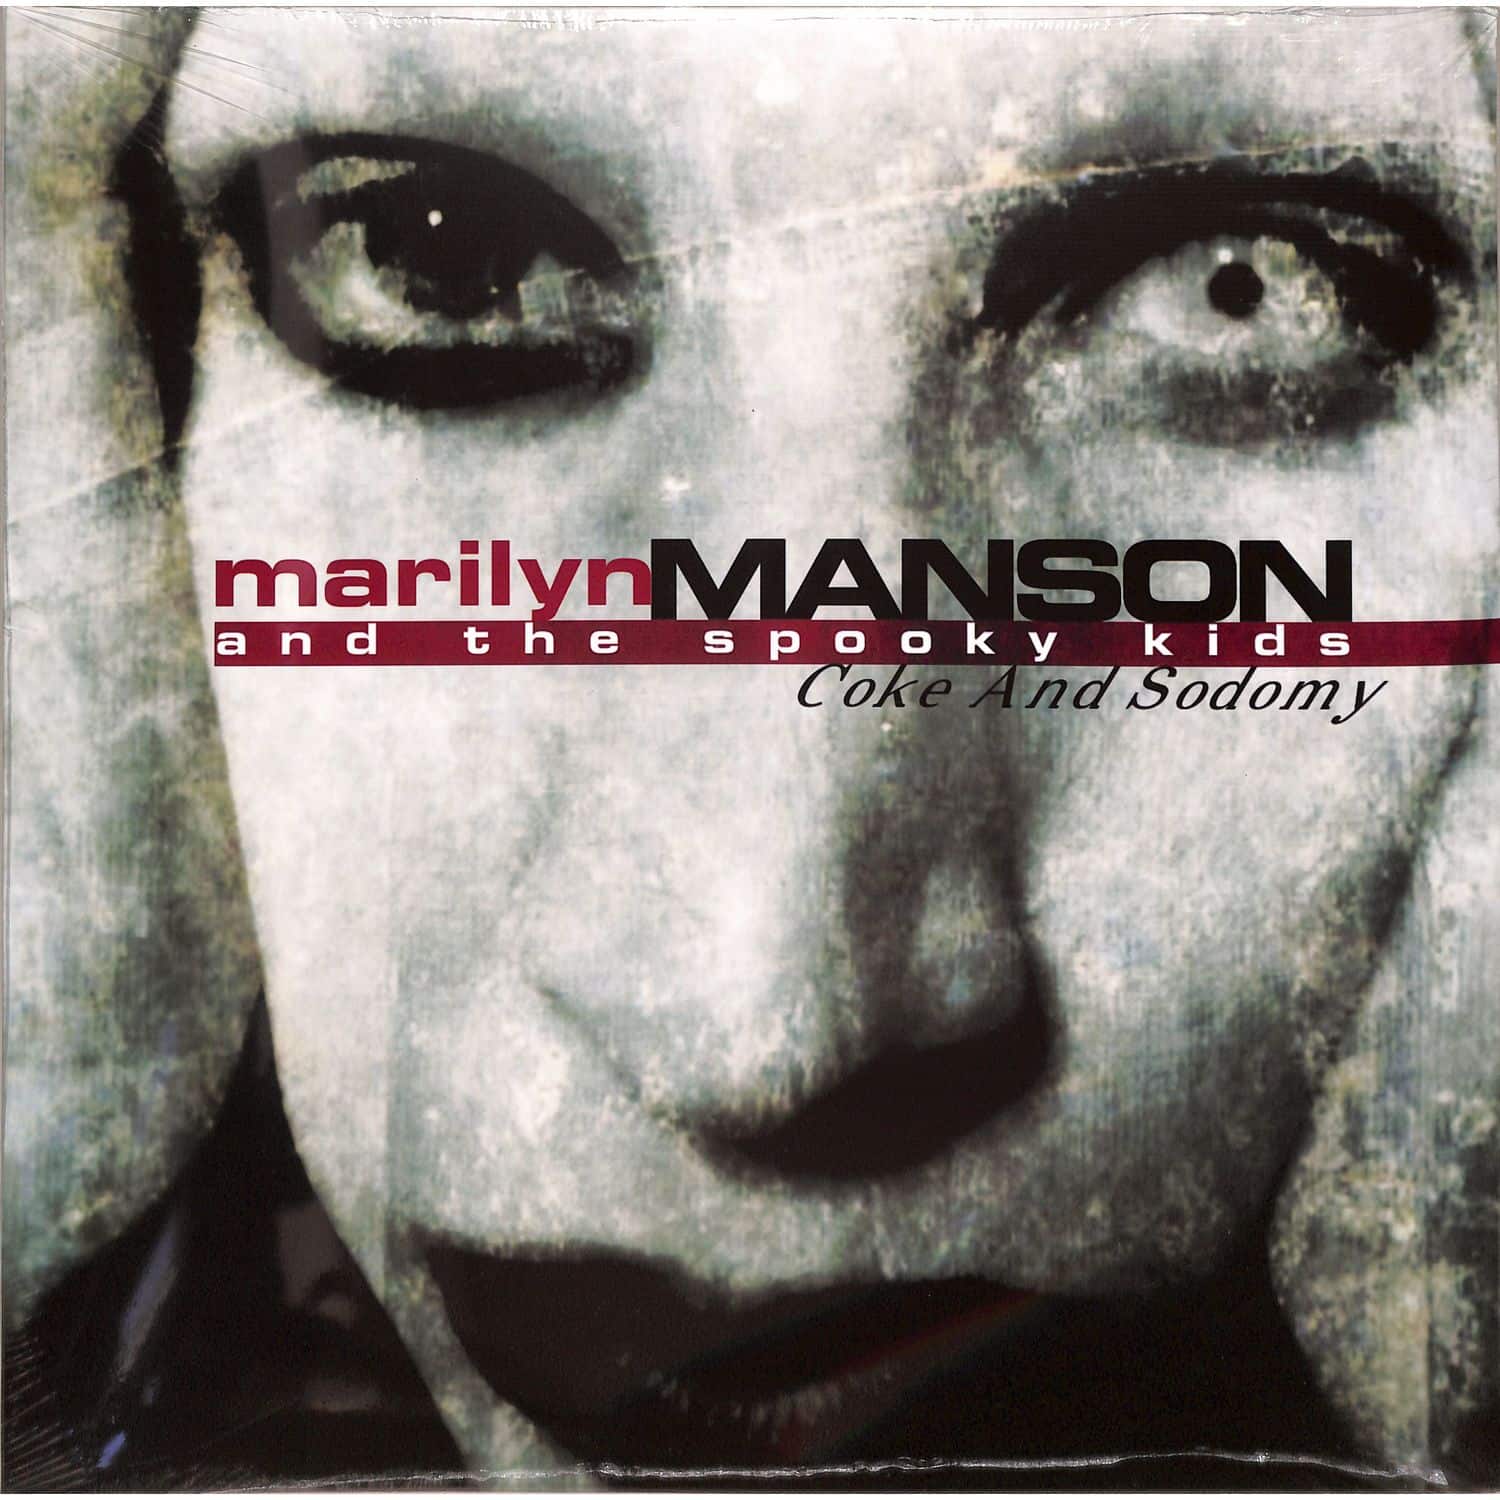 Marilyn Manson - COKE AND SODOMY 